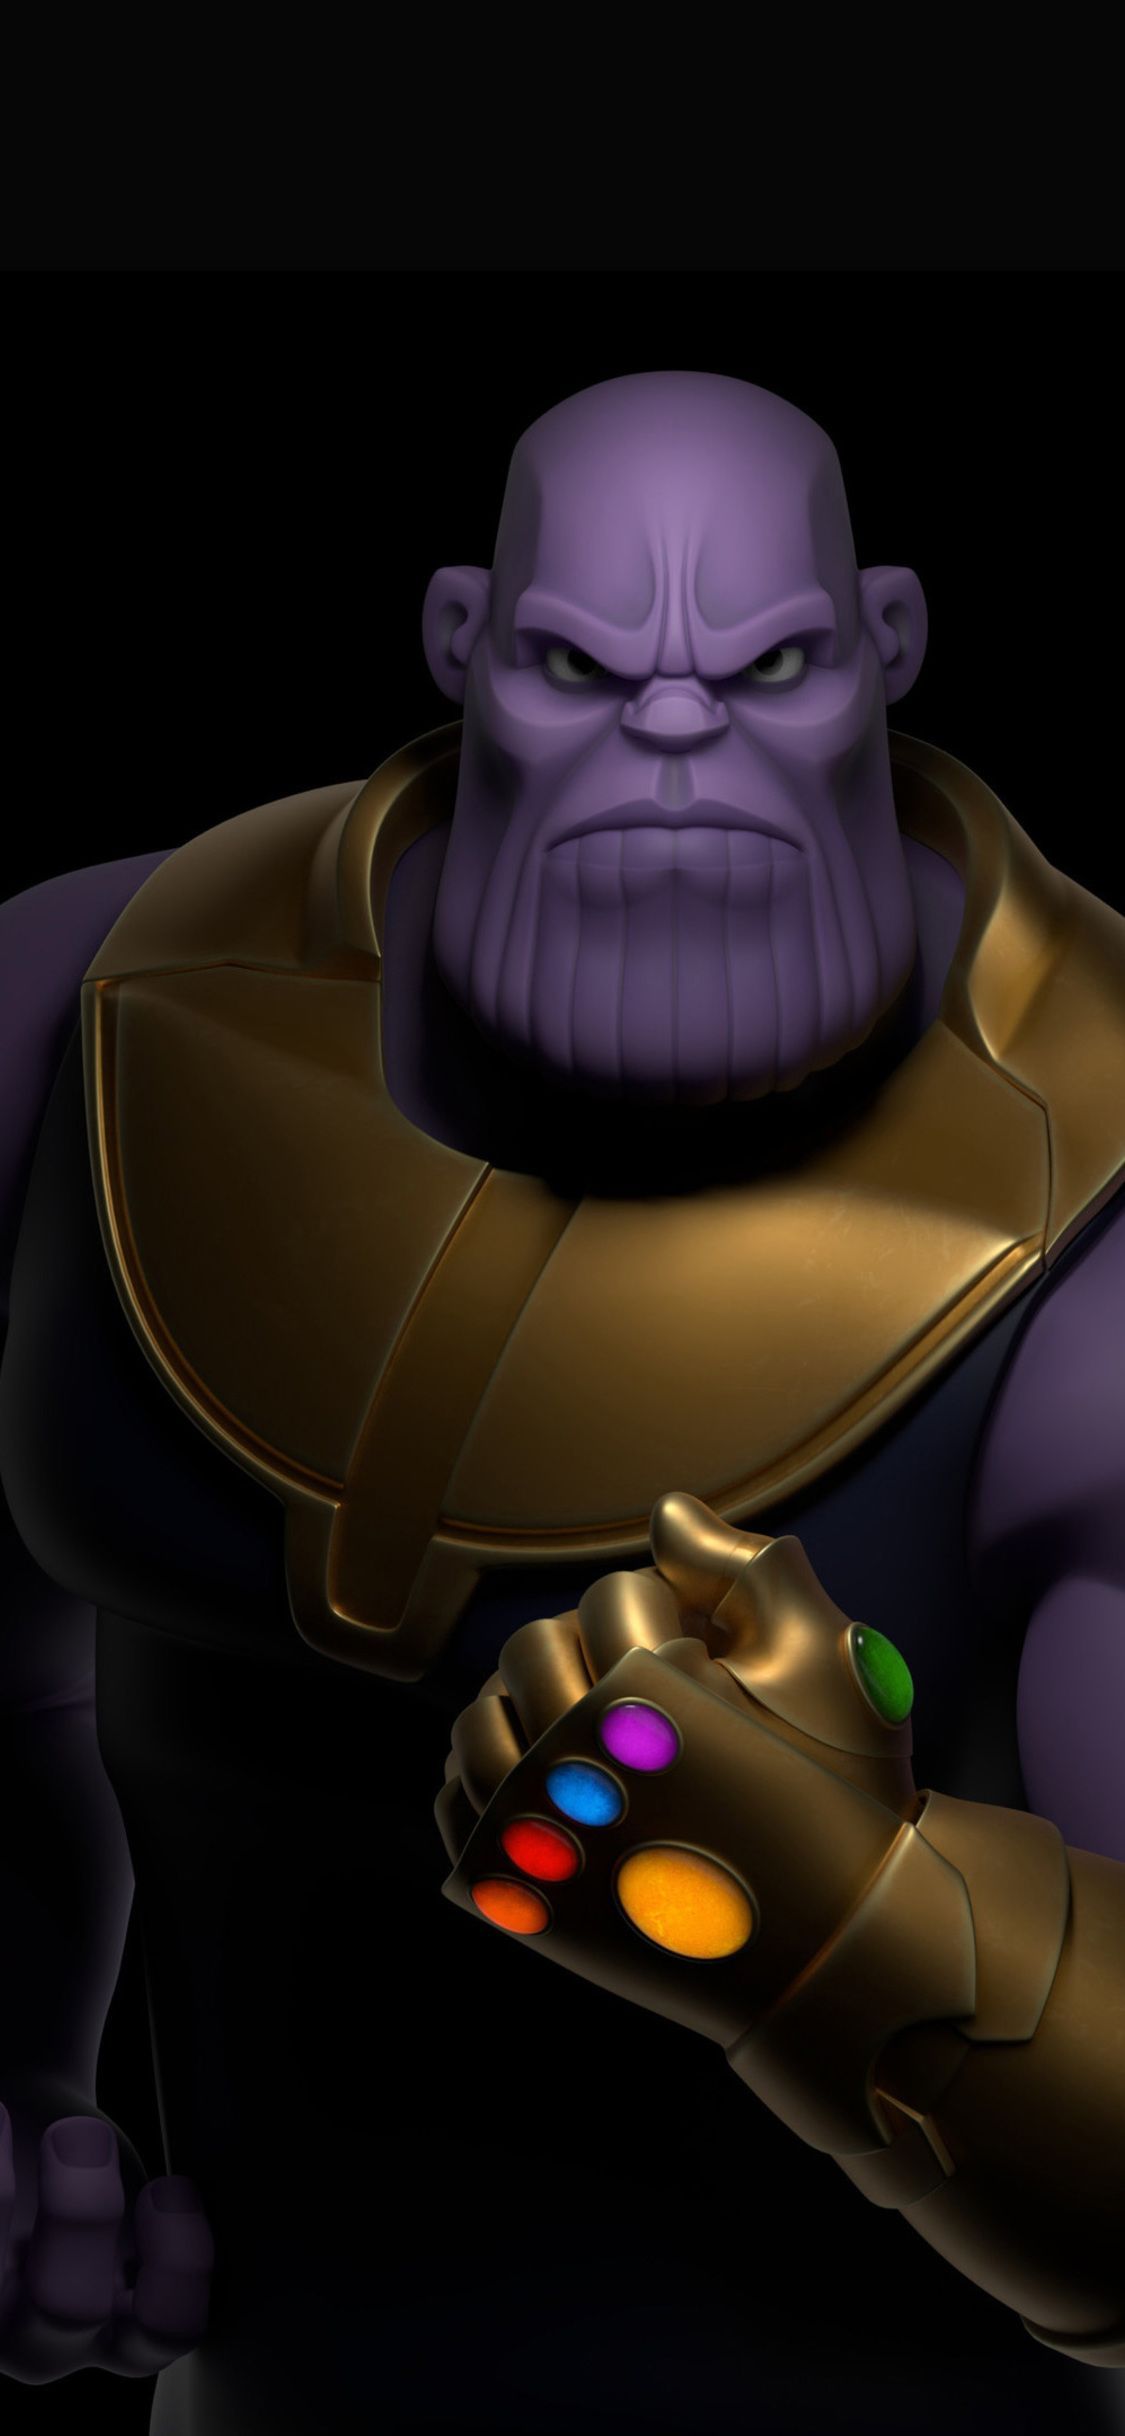 Thanos Digital Art iPhone X. Marvel villains, Marvel superheroes